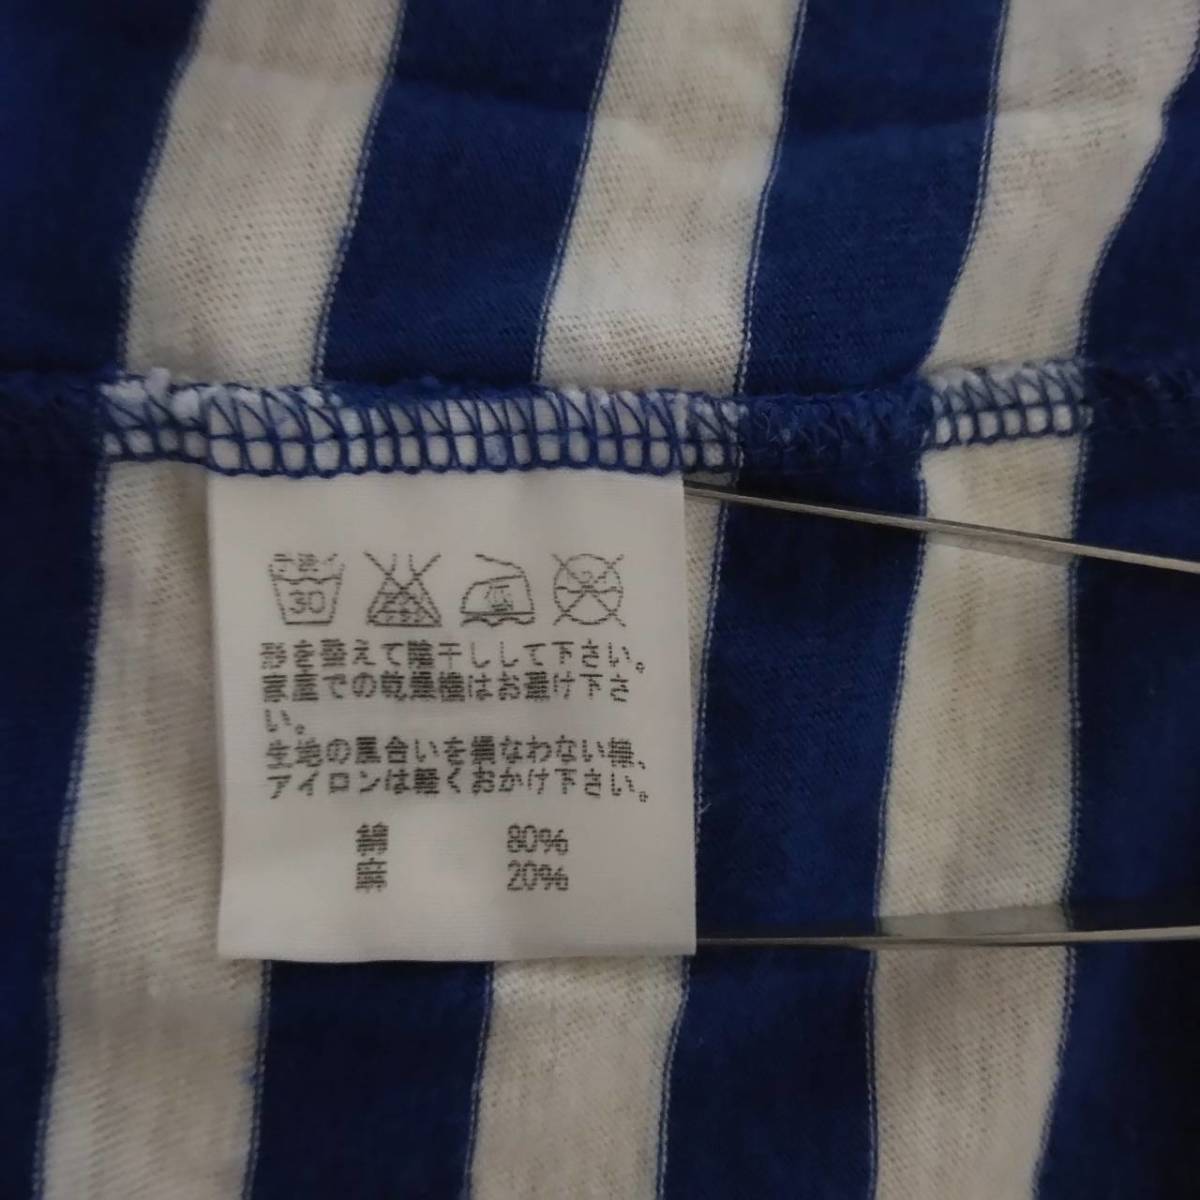 665 SUNAOKUWAHARA Sunao Kuwahara блуза рубашка голубой полоса лодка шея аксессуары хлопок лен Kiyoshi . чувство сделано в Японии USED женский 